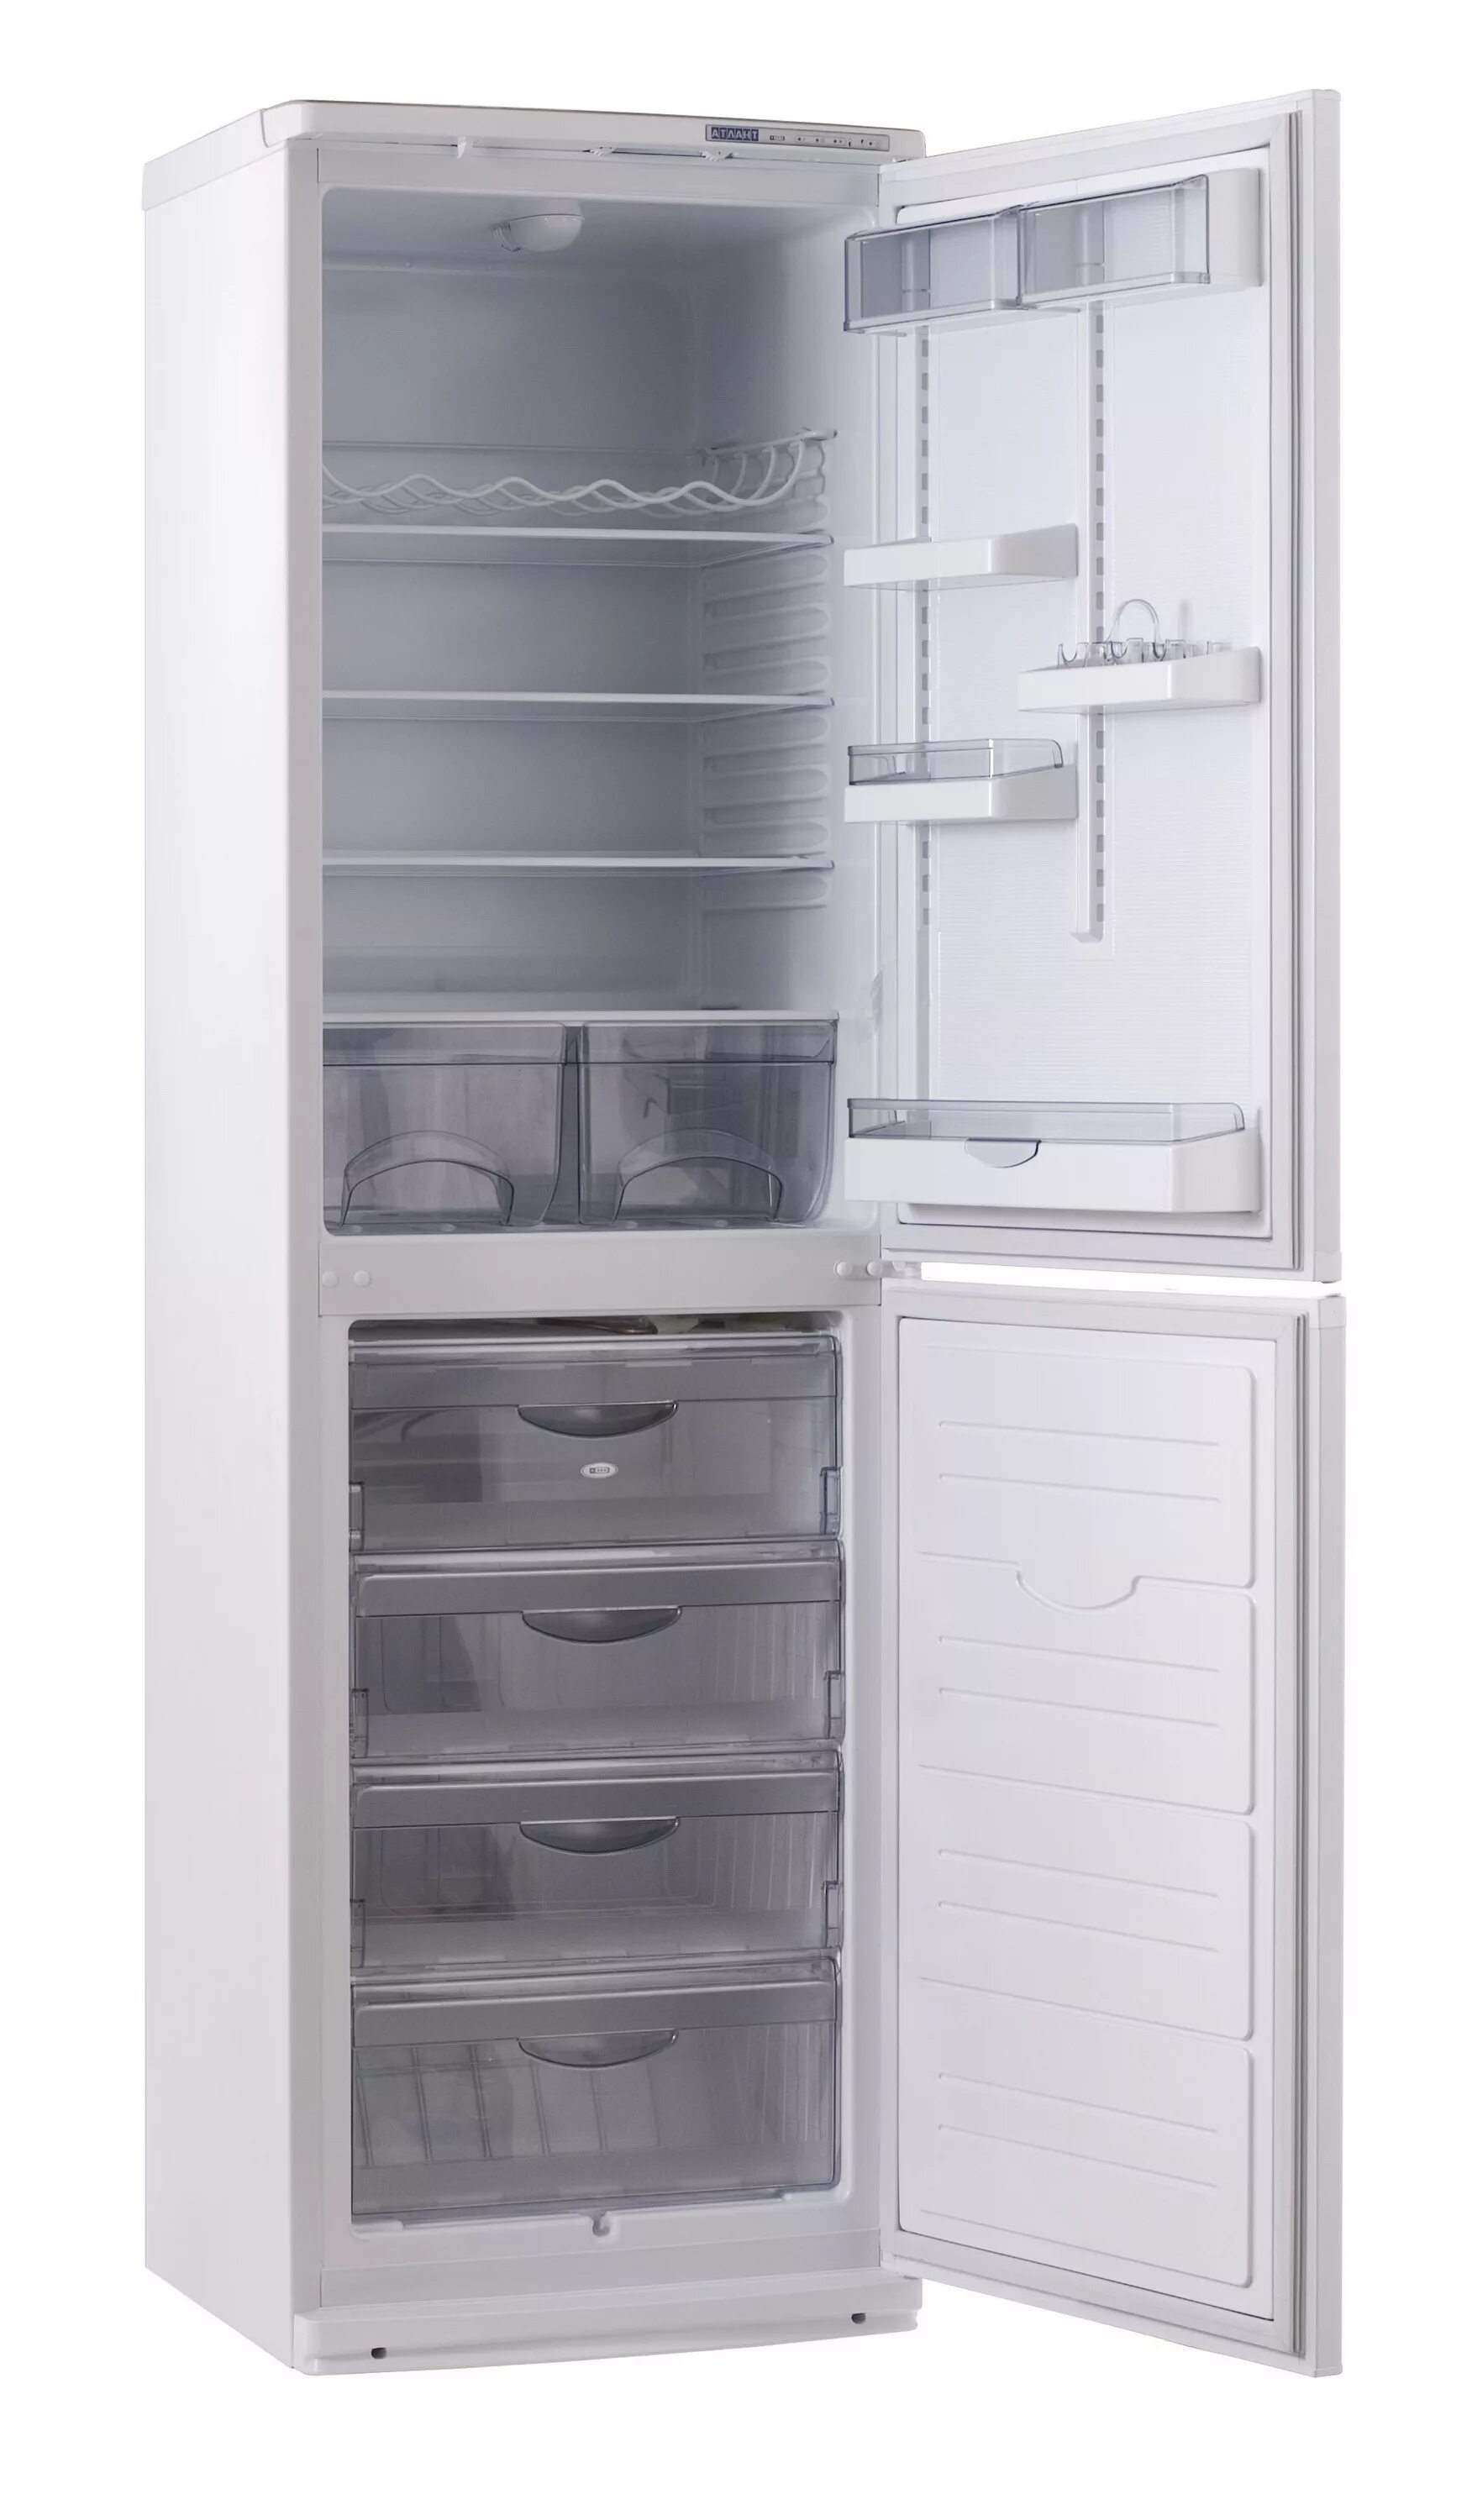 Купит холодильник атлант 6025. Холодильник Атлант хм 6025-031. Холодильник-морозильник Атлант хм-6025-031. Холодильник Атлант 6025. Холодильник Атлант двухкомпрессорный хм-6025-031.